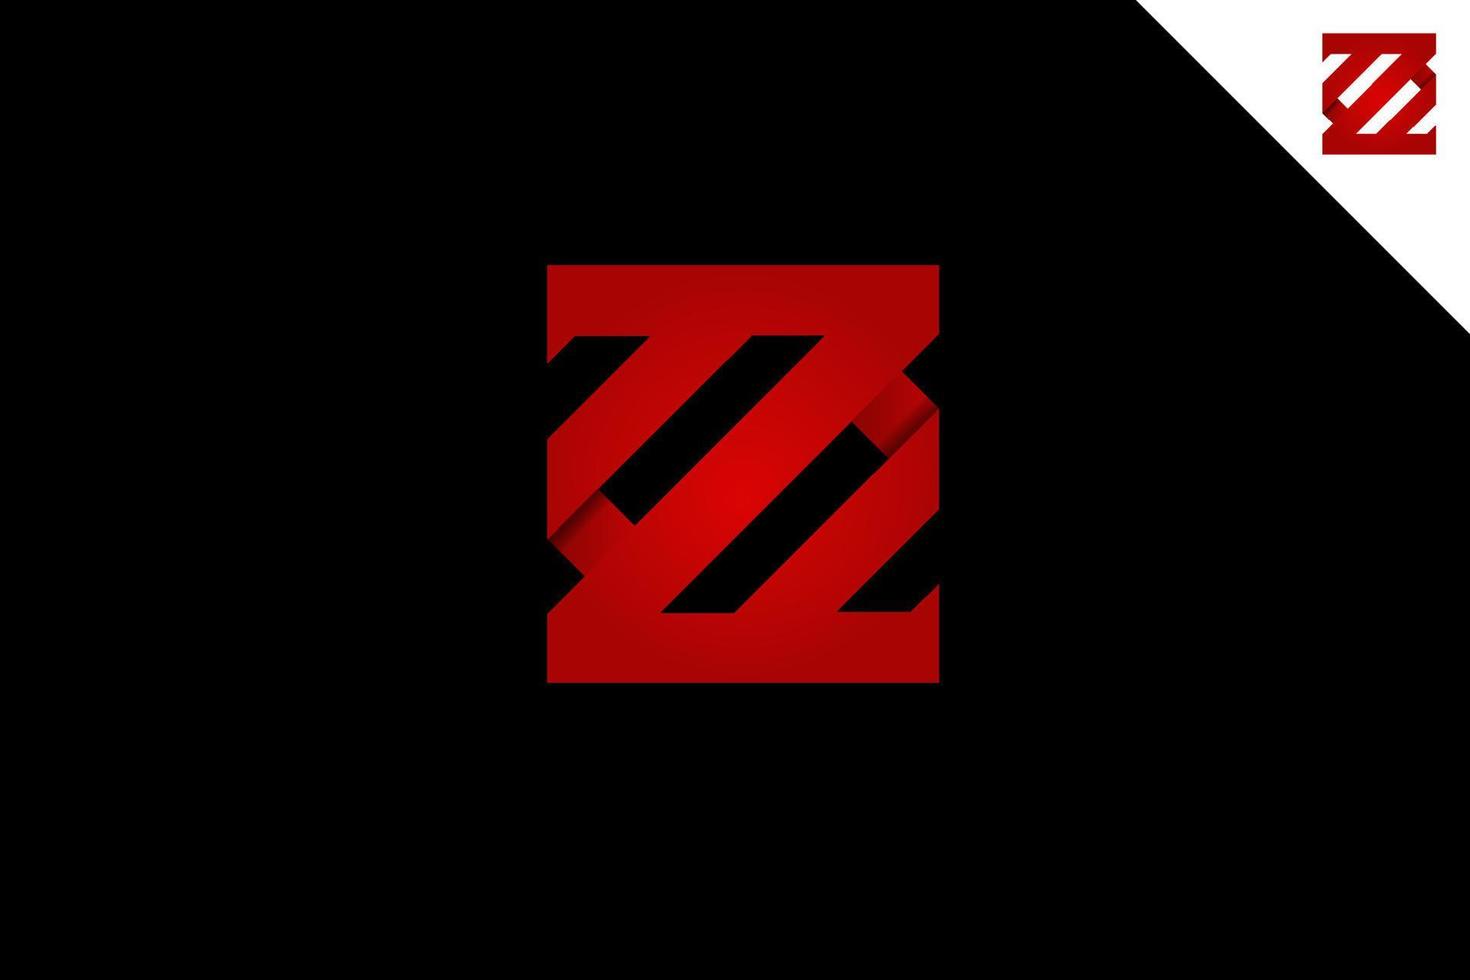 Buchstabe zs oder sz Logo-Design-Vektor vektor